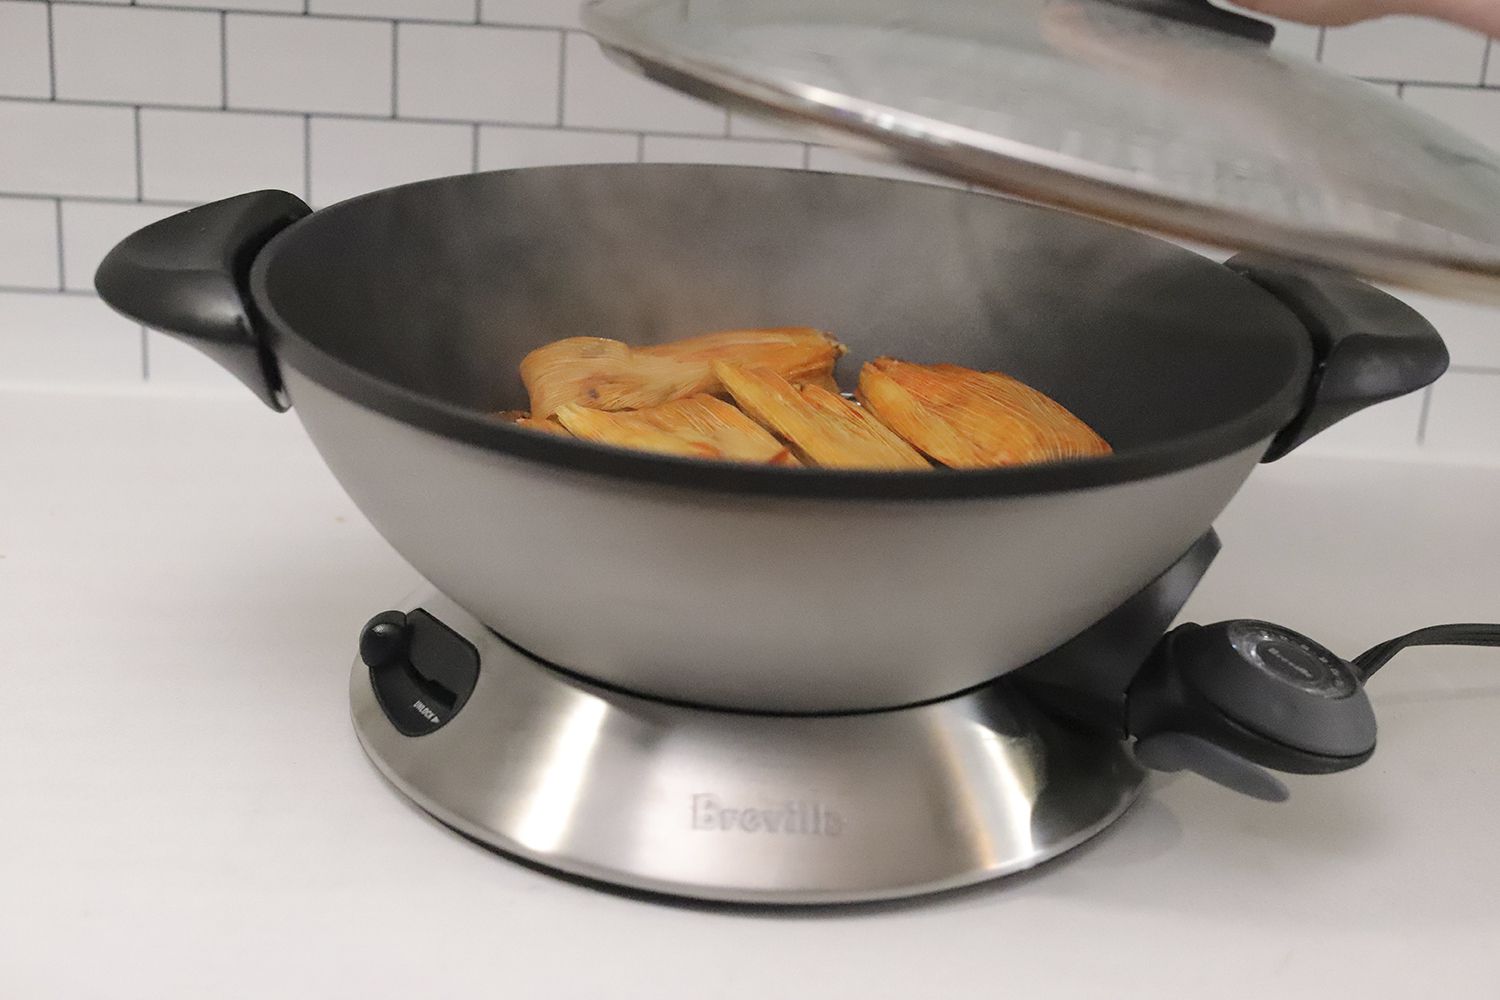 Breville Hot Wok Pro steams potatoes.